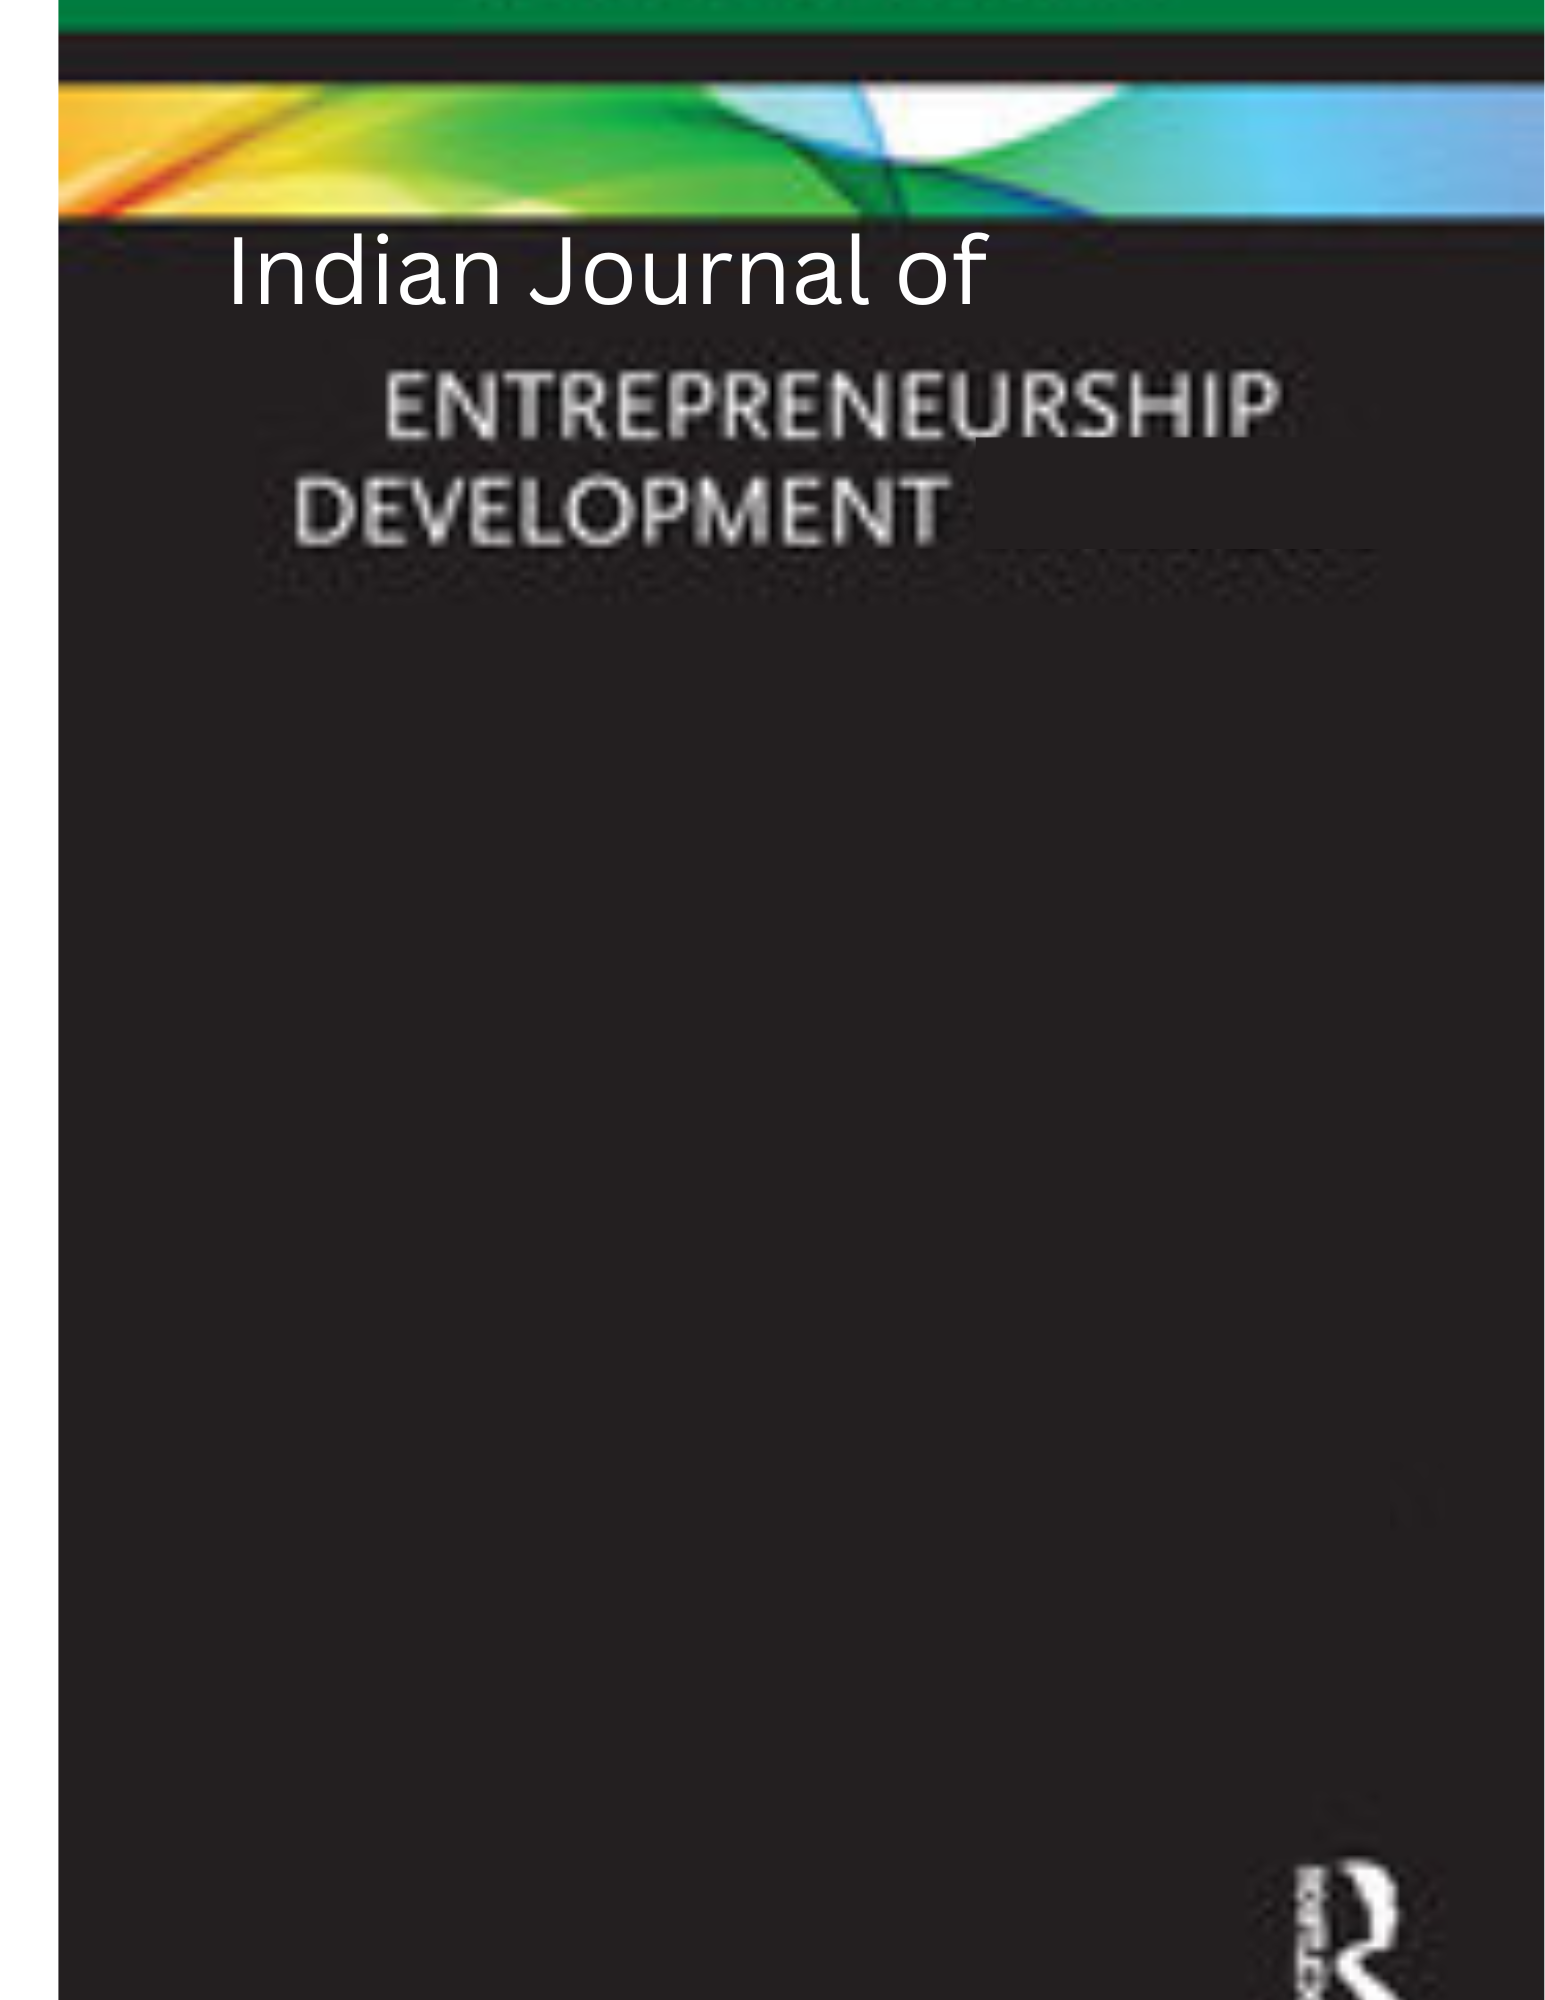 Indian Journal of Entreprenership Development